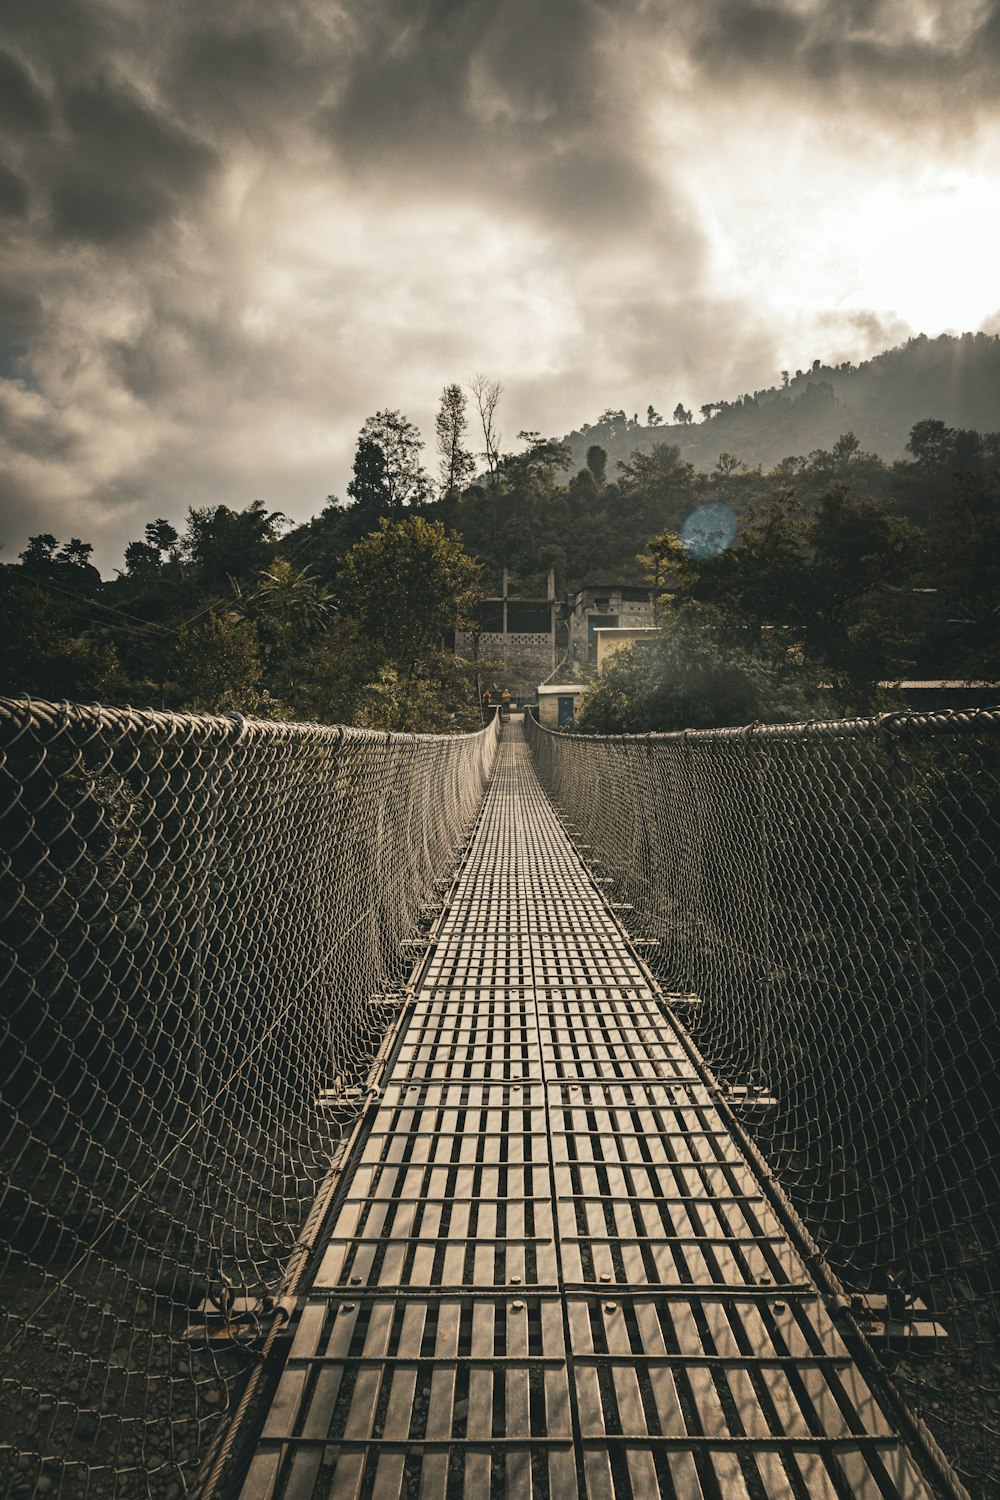 a long suspension bridge over a river under a cloudy sky